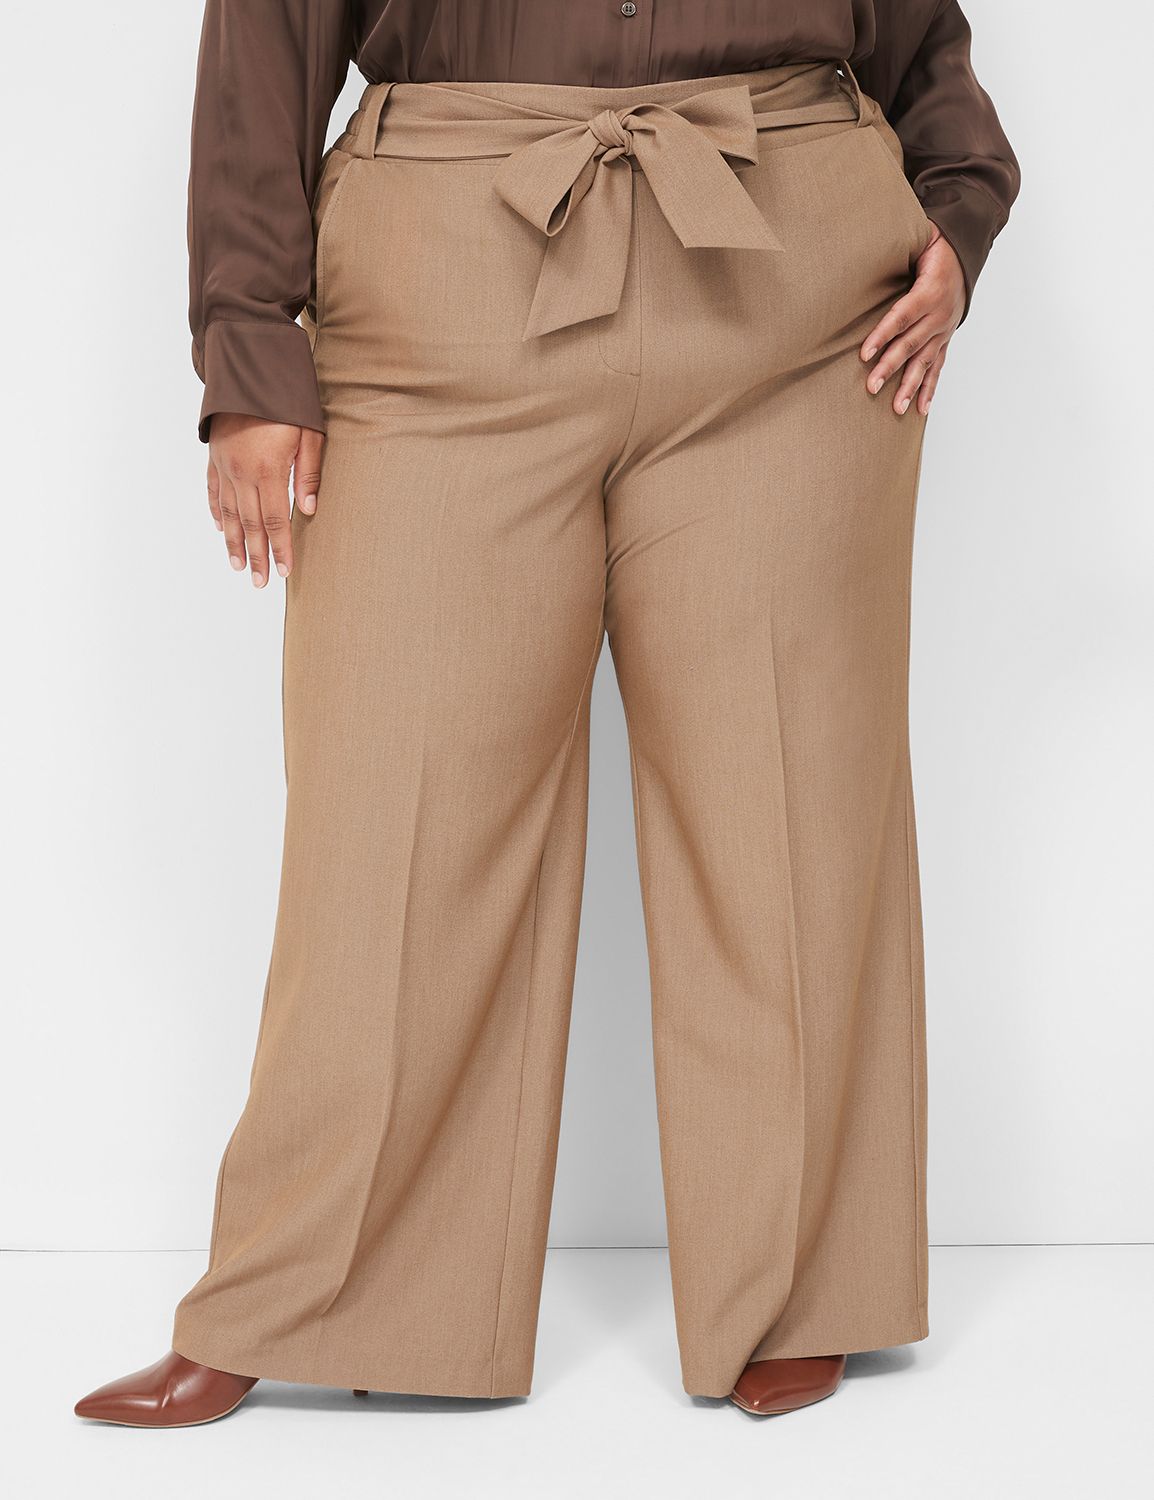 HSMQHJWE Plus Size Wide Leg Pants Casual Dress Pants For Women